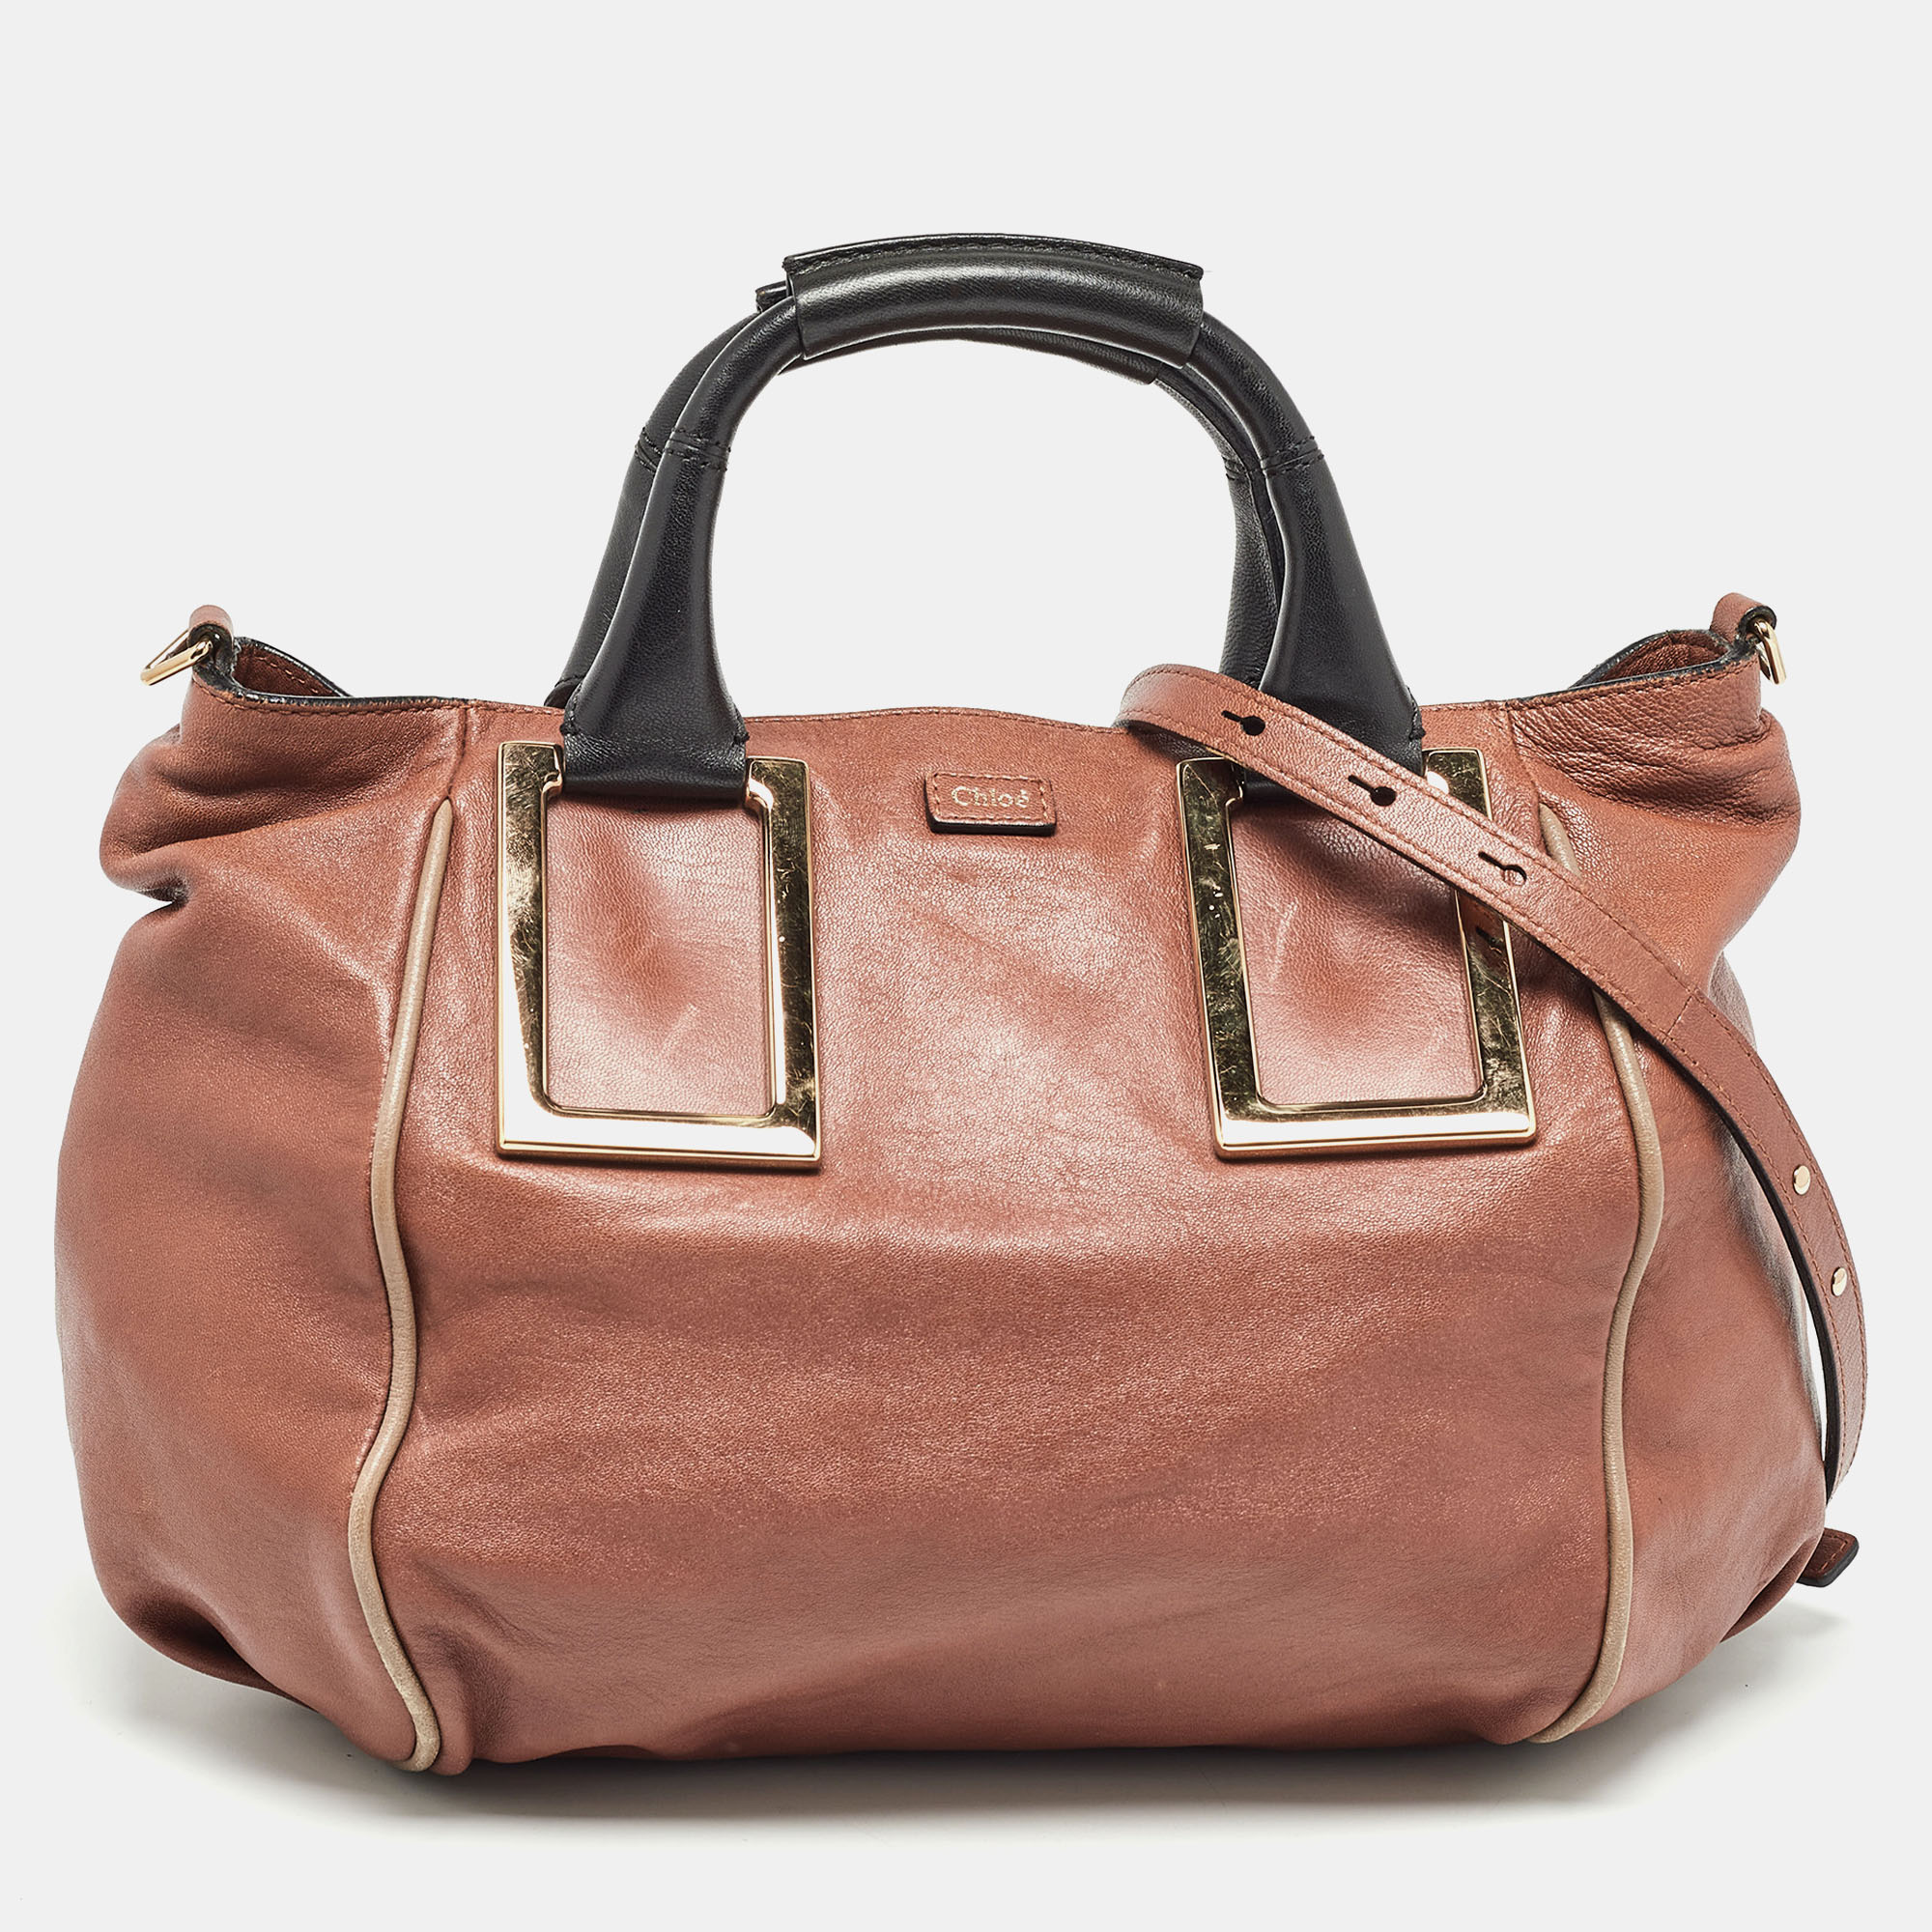 Chloe brown leather medium ethel satchel